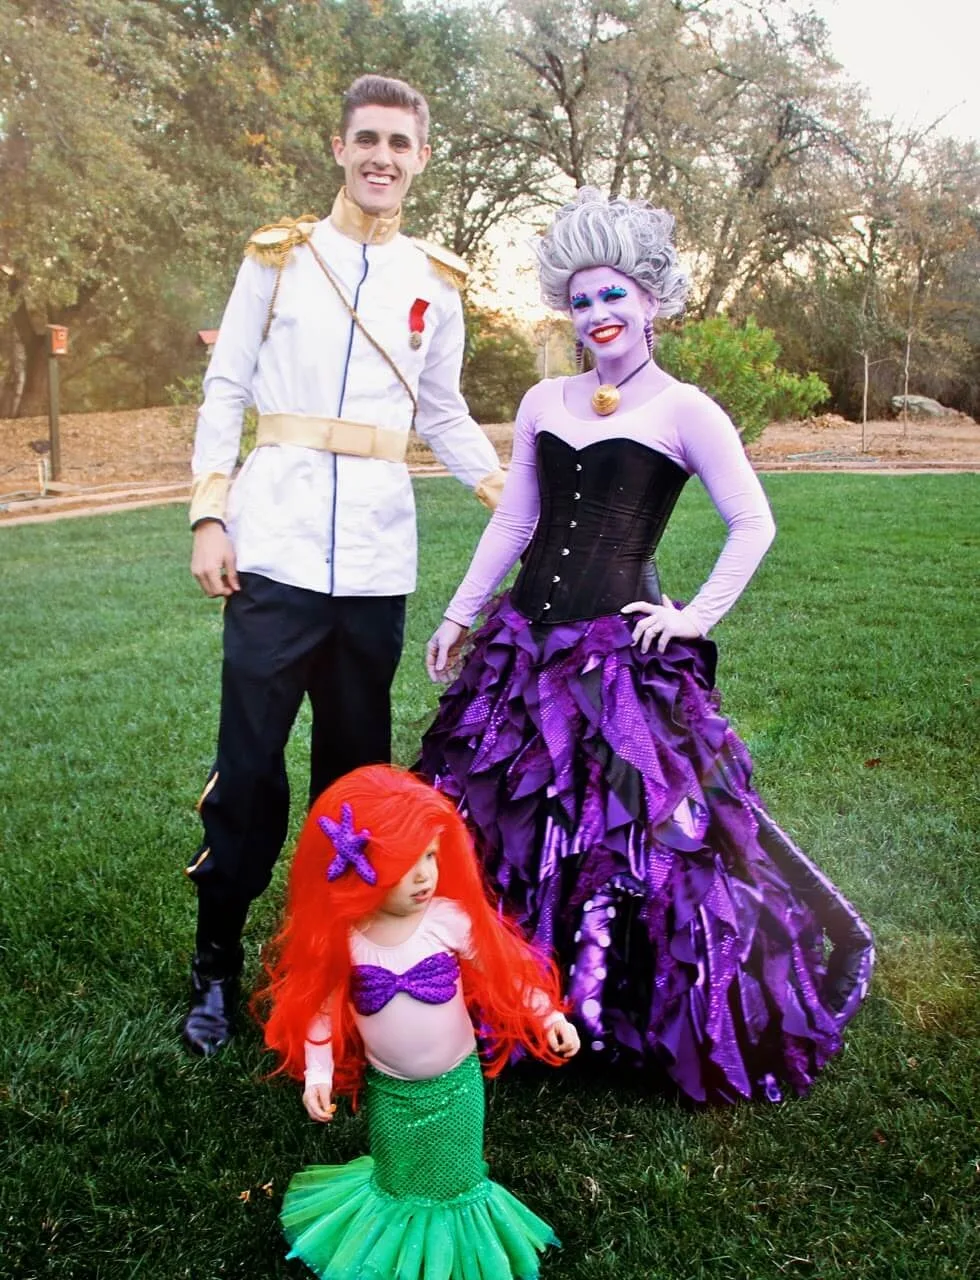 The little mermaid family costume.